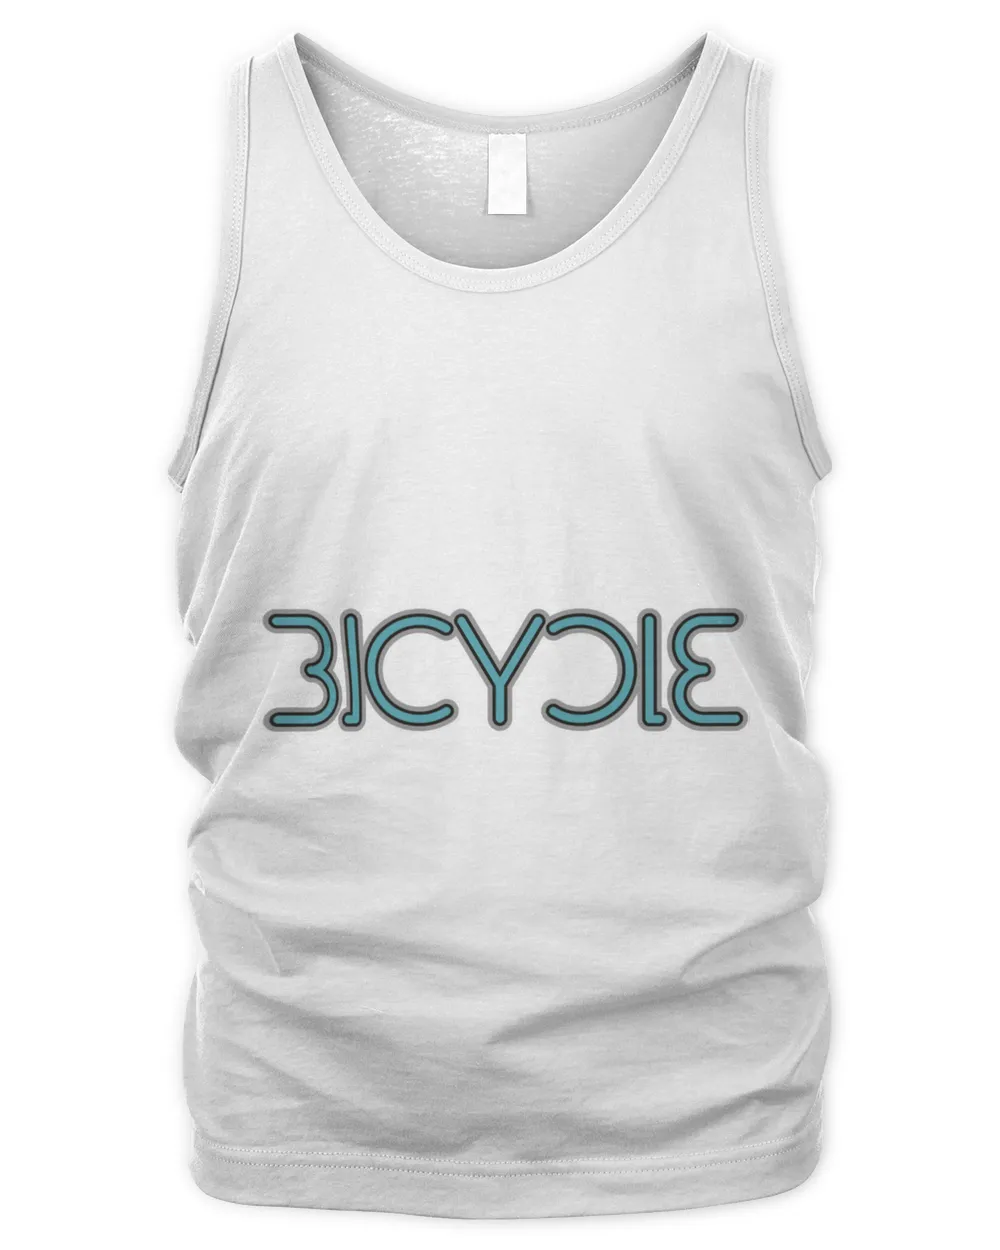 BICYCLE Symmetry Classic T-Shirt